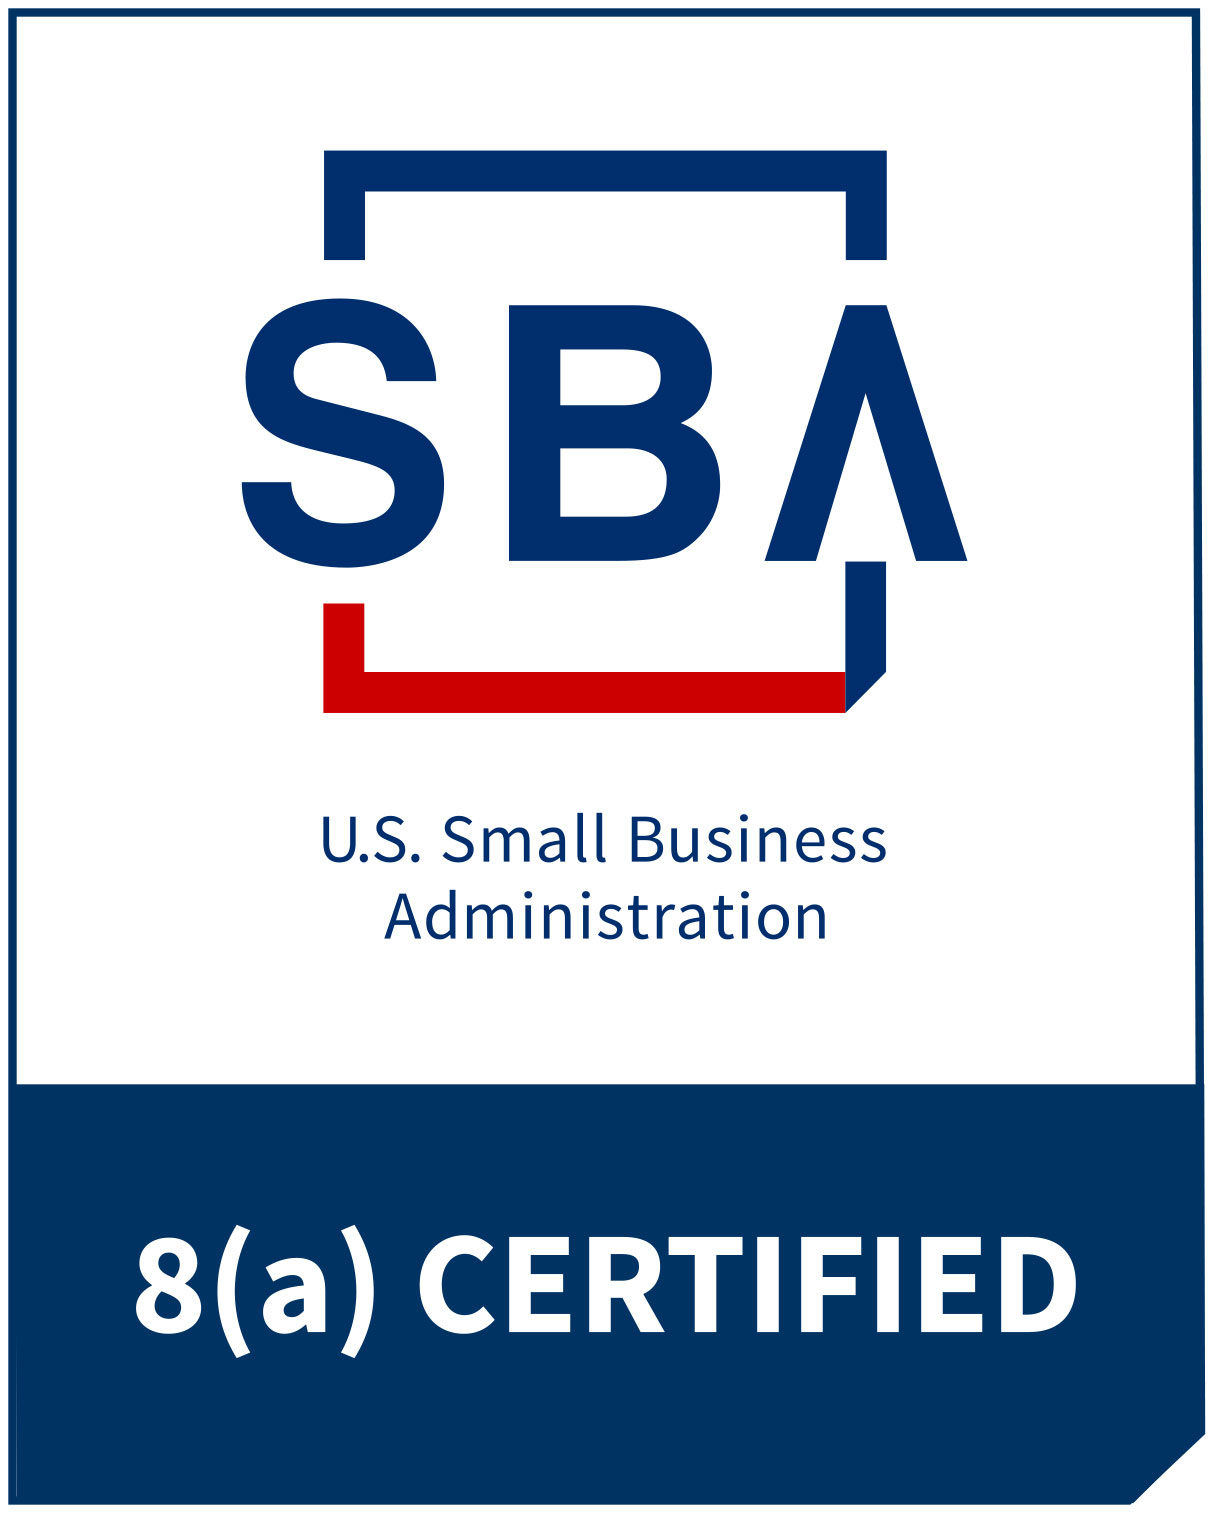 8a-Certified-e1633371021870